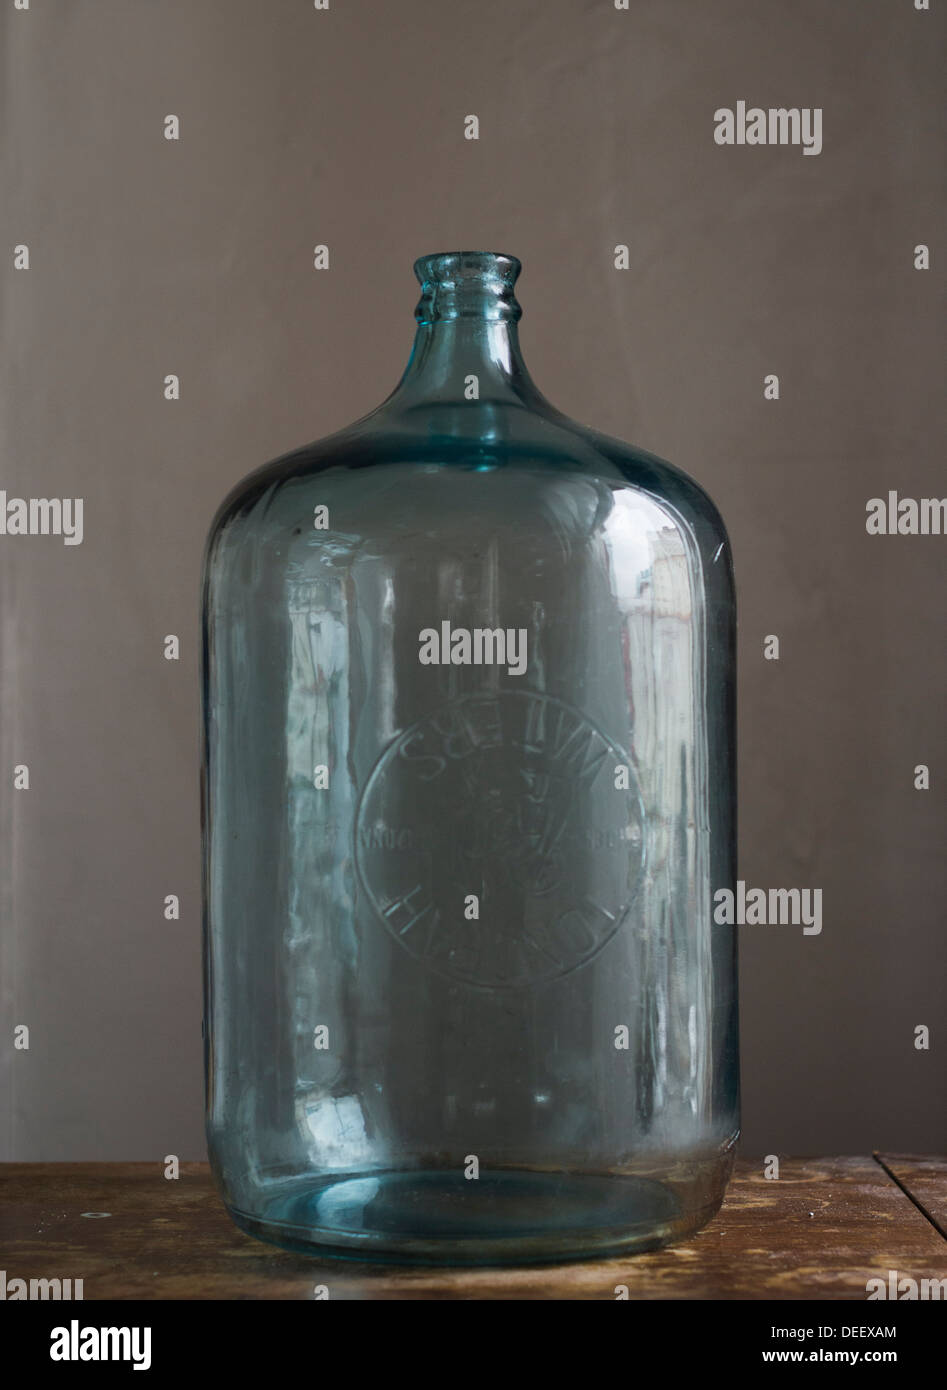 Vintage 5 gallon glass jug Stock Photo - Alamy